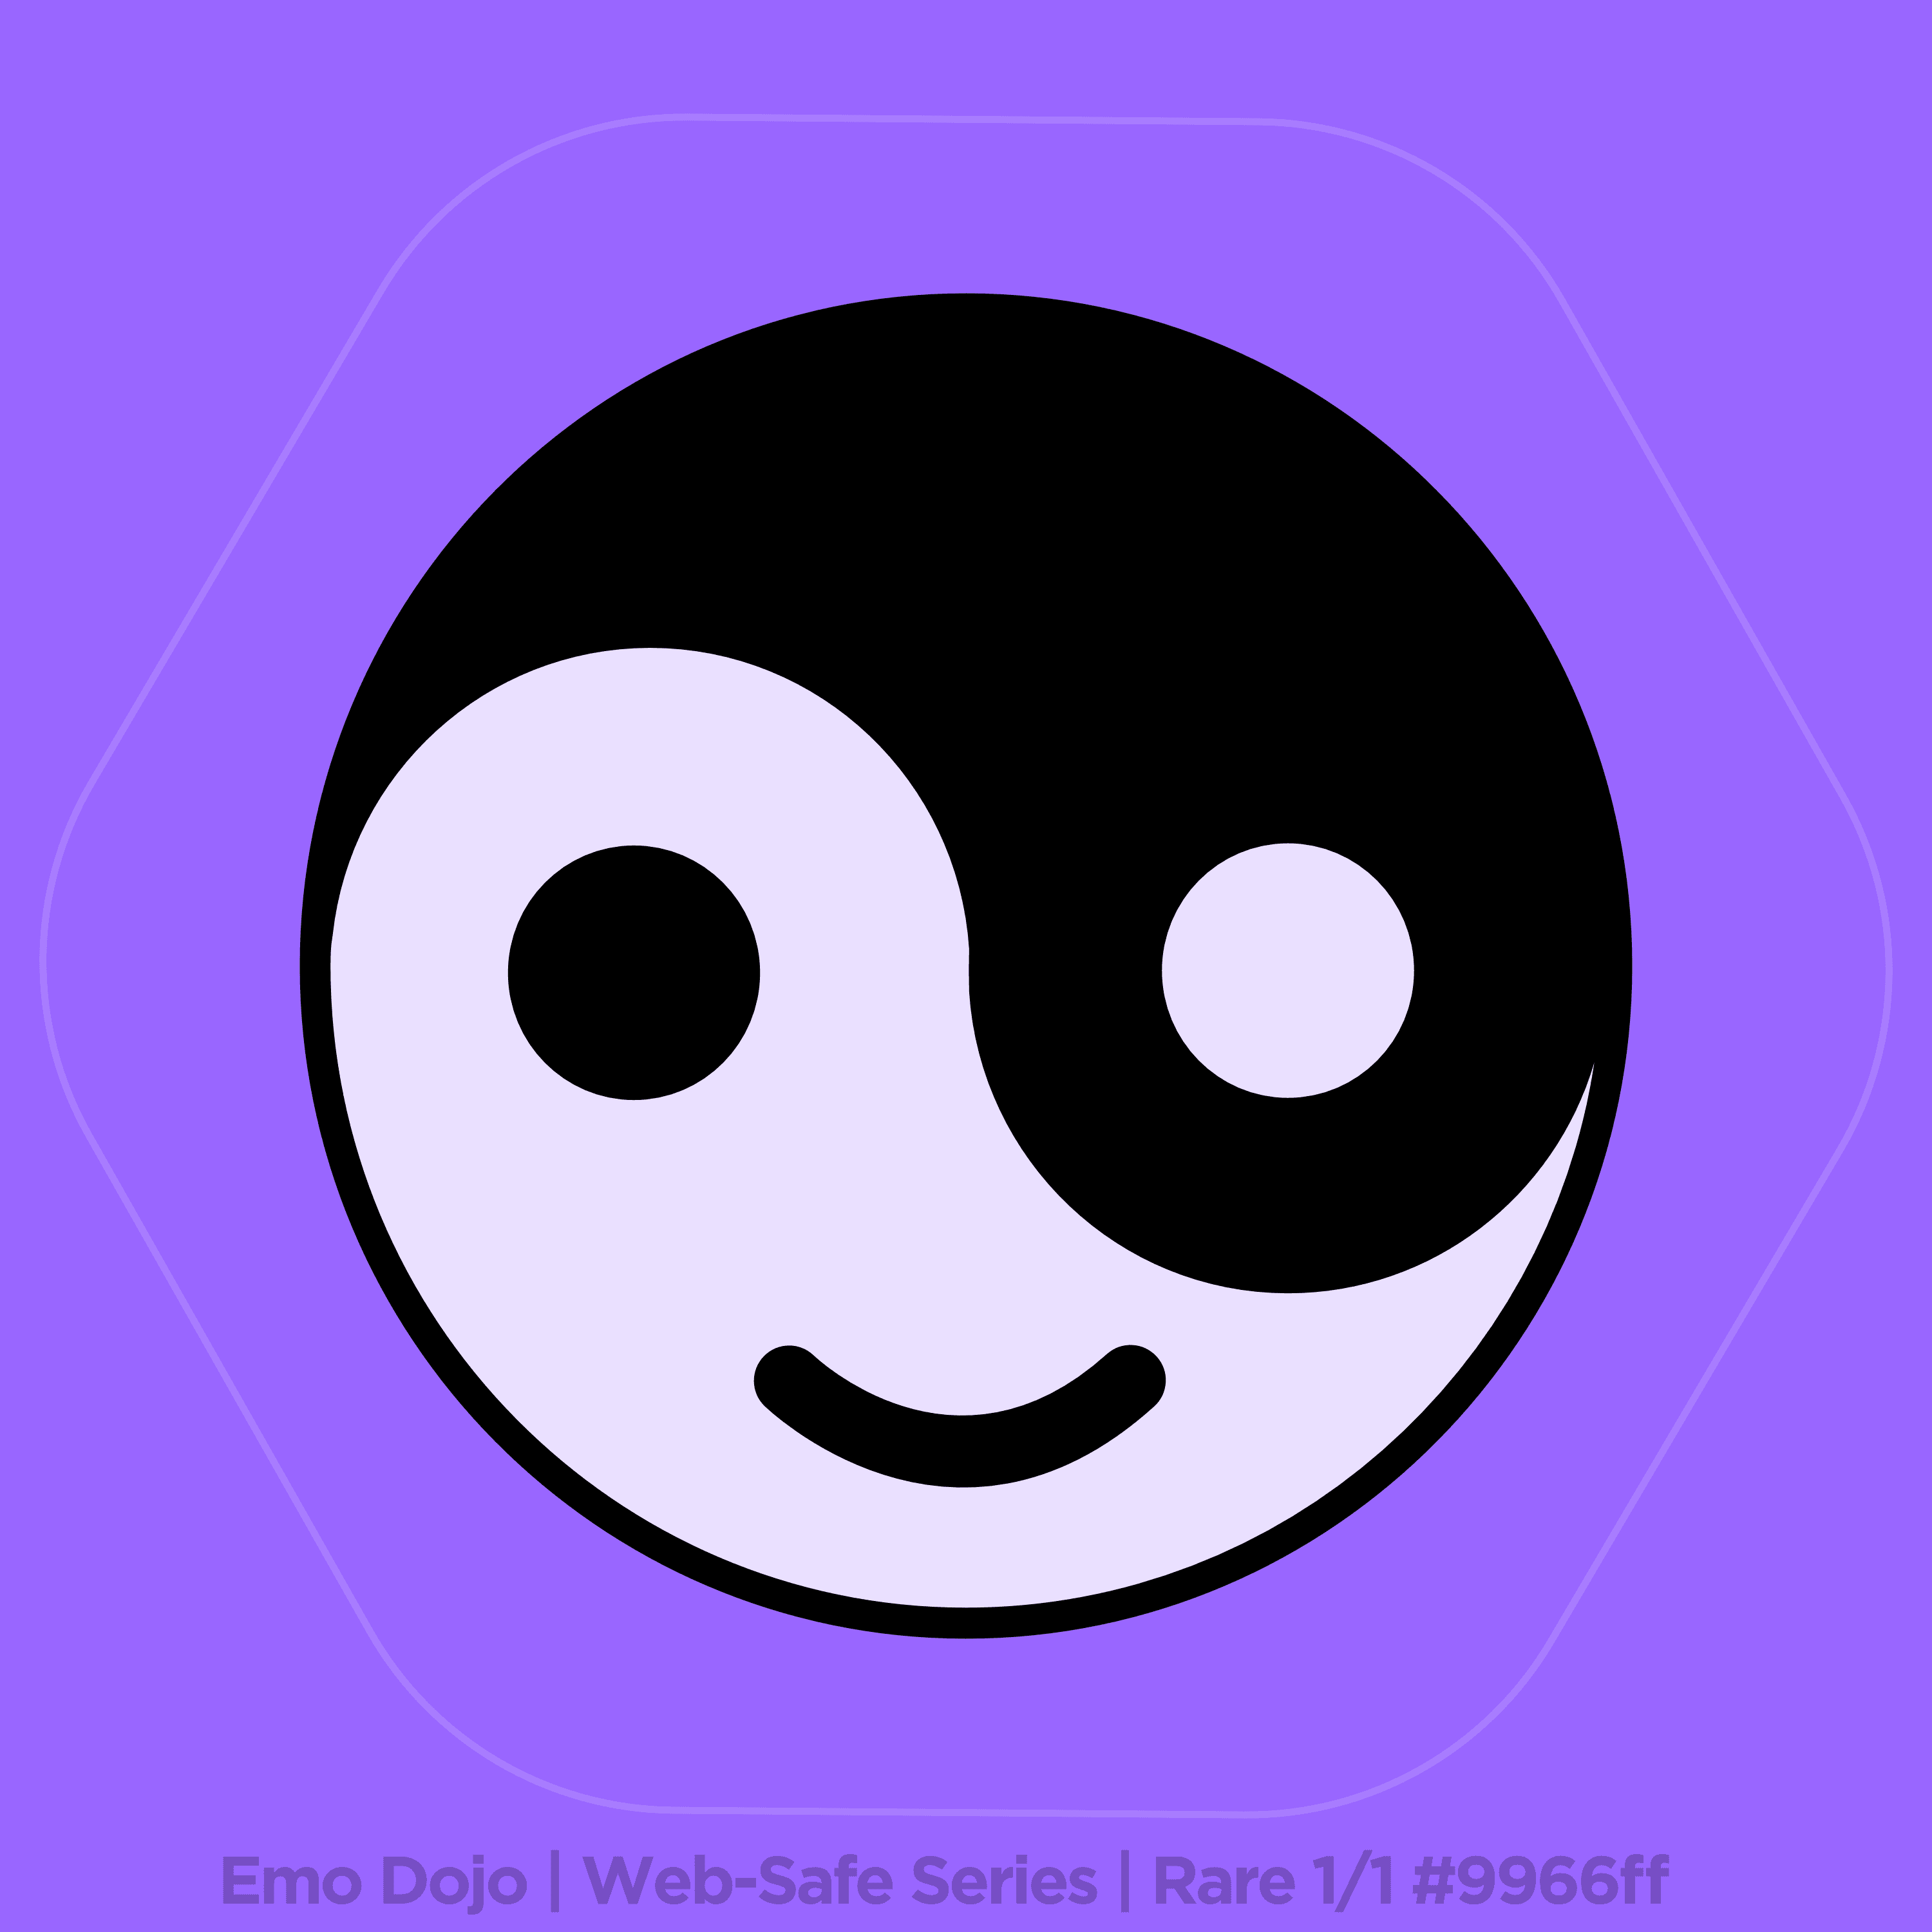 Emo Dojo | Web-Safe Series | Rare 1/1 #9966ff